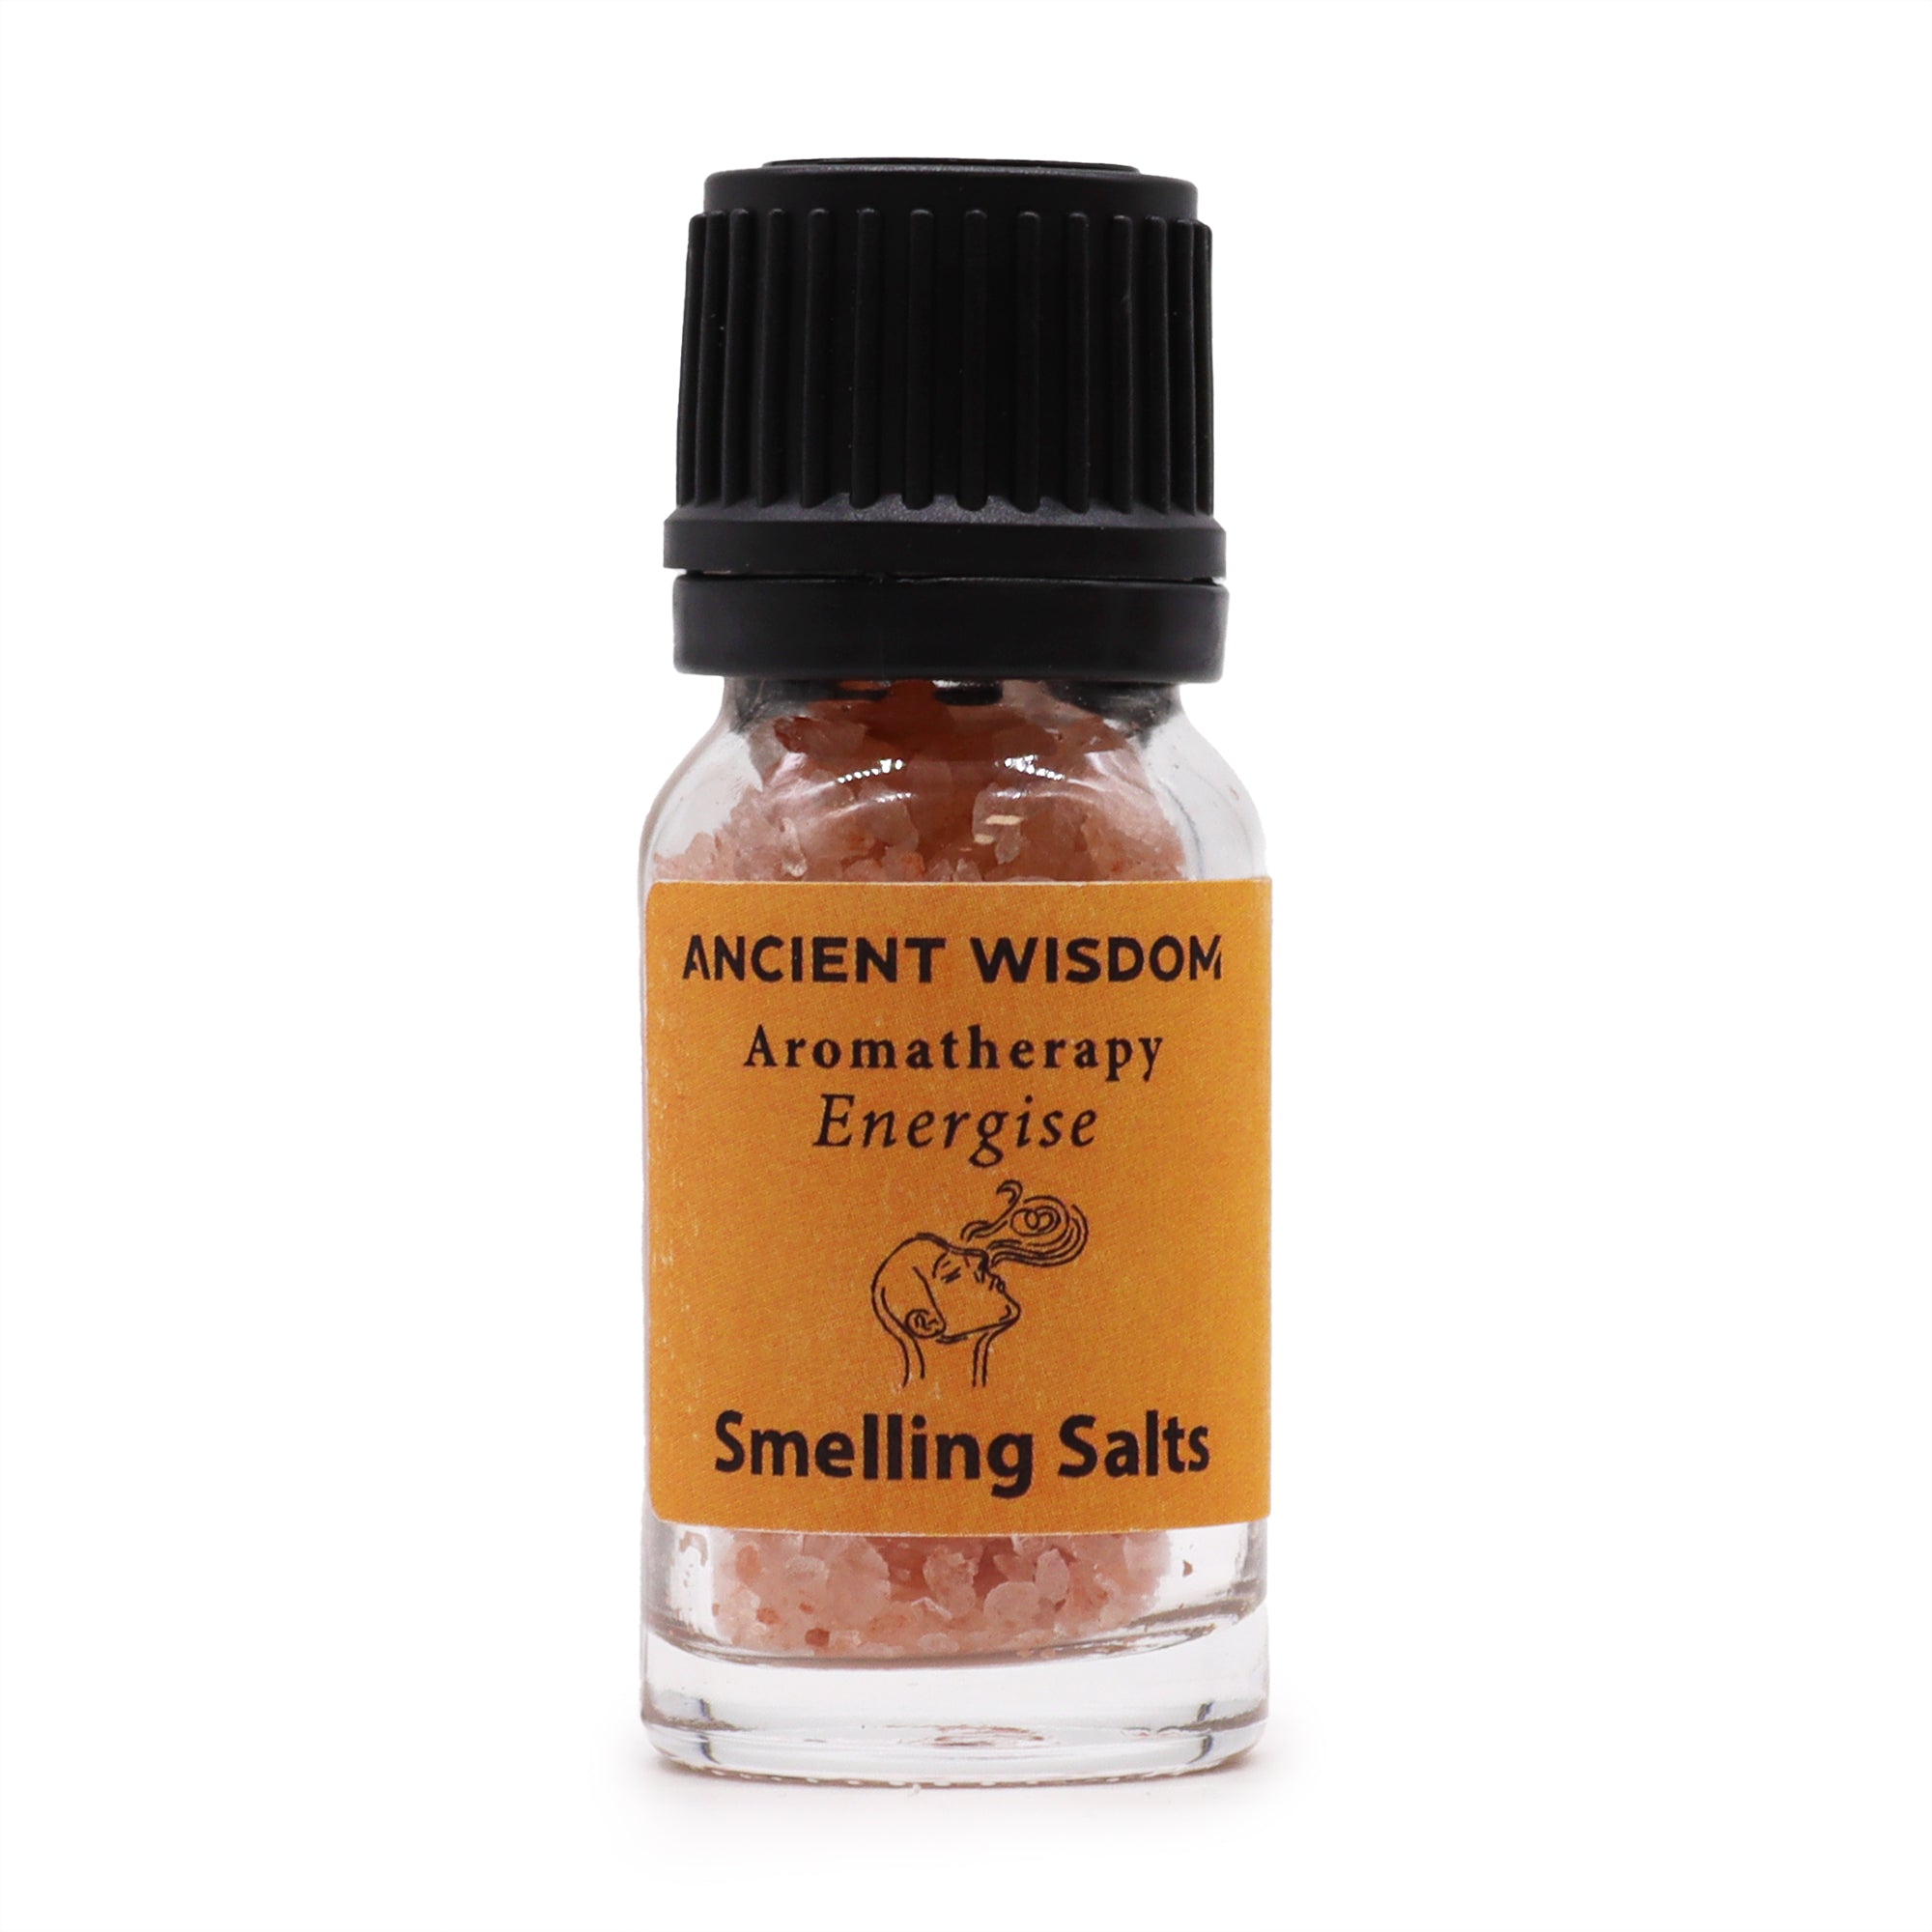 View Energise Aromatherapy Smelling Salt information